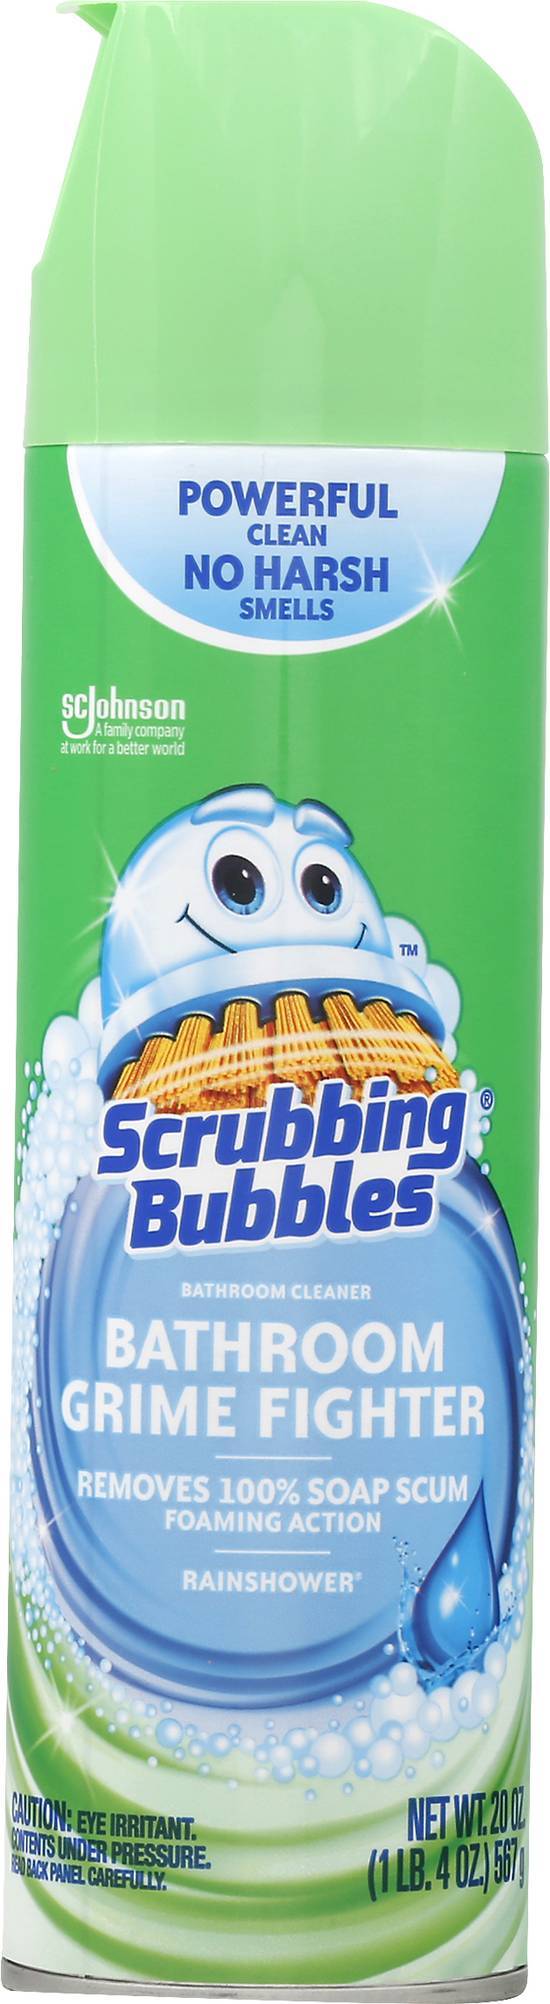 Scrubbing Bubbles Grime Fighter Rainshower Bathroom Cleaner